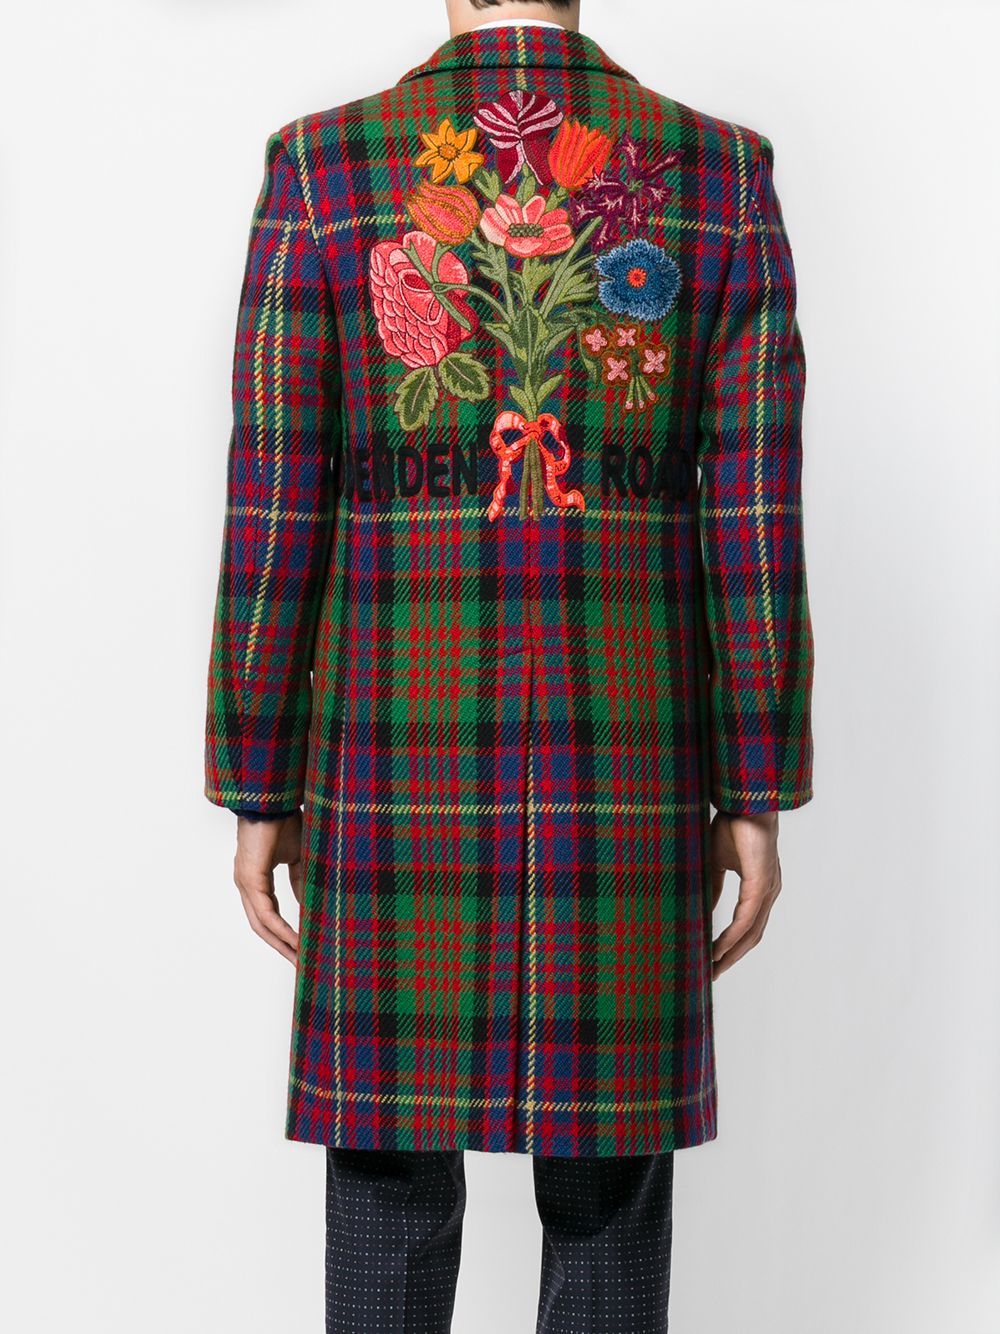 Gucci Floral Embroidered Checked Coat, $5,980 | farfetch.com 